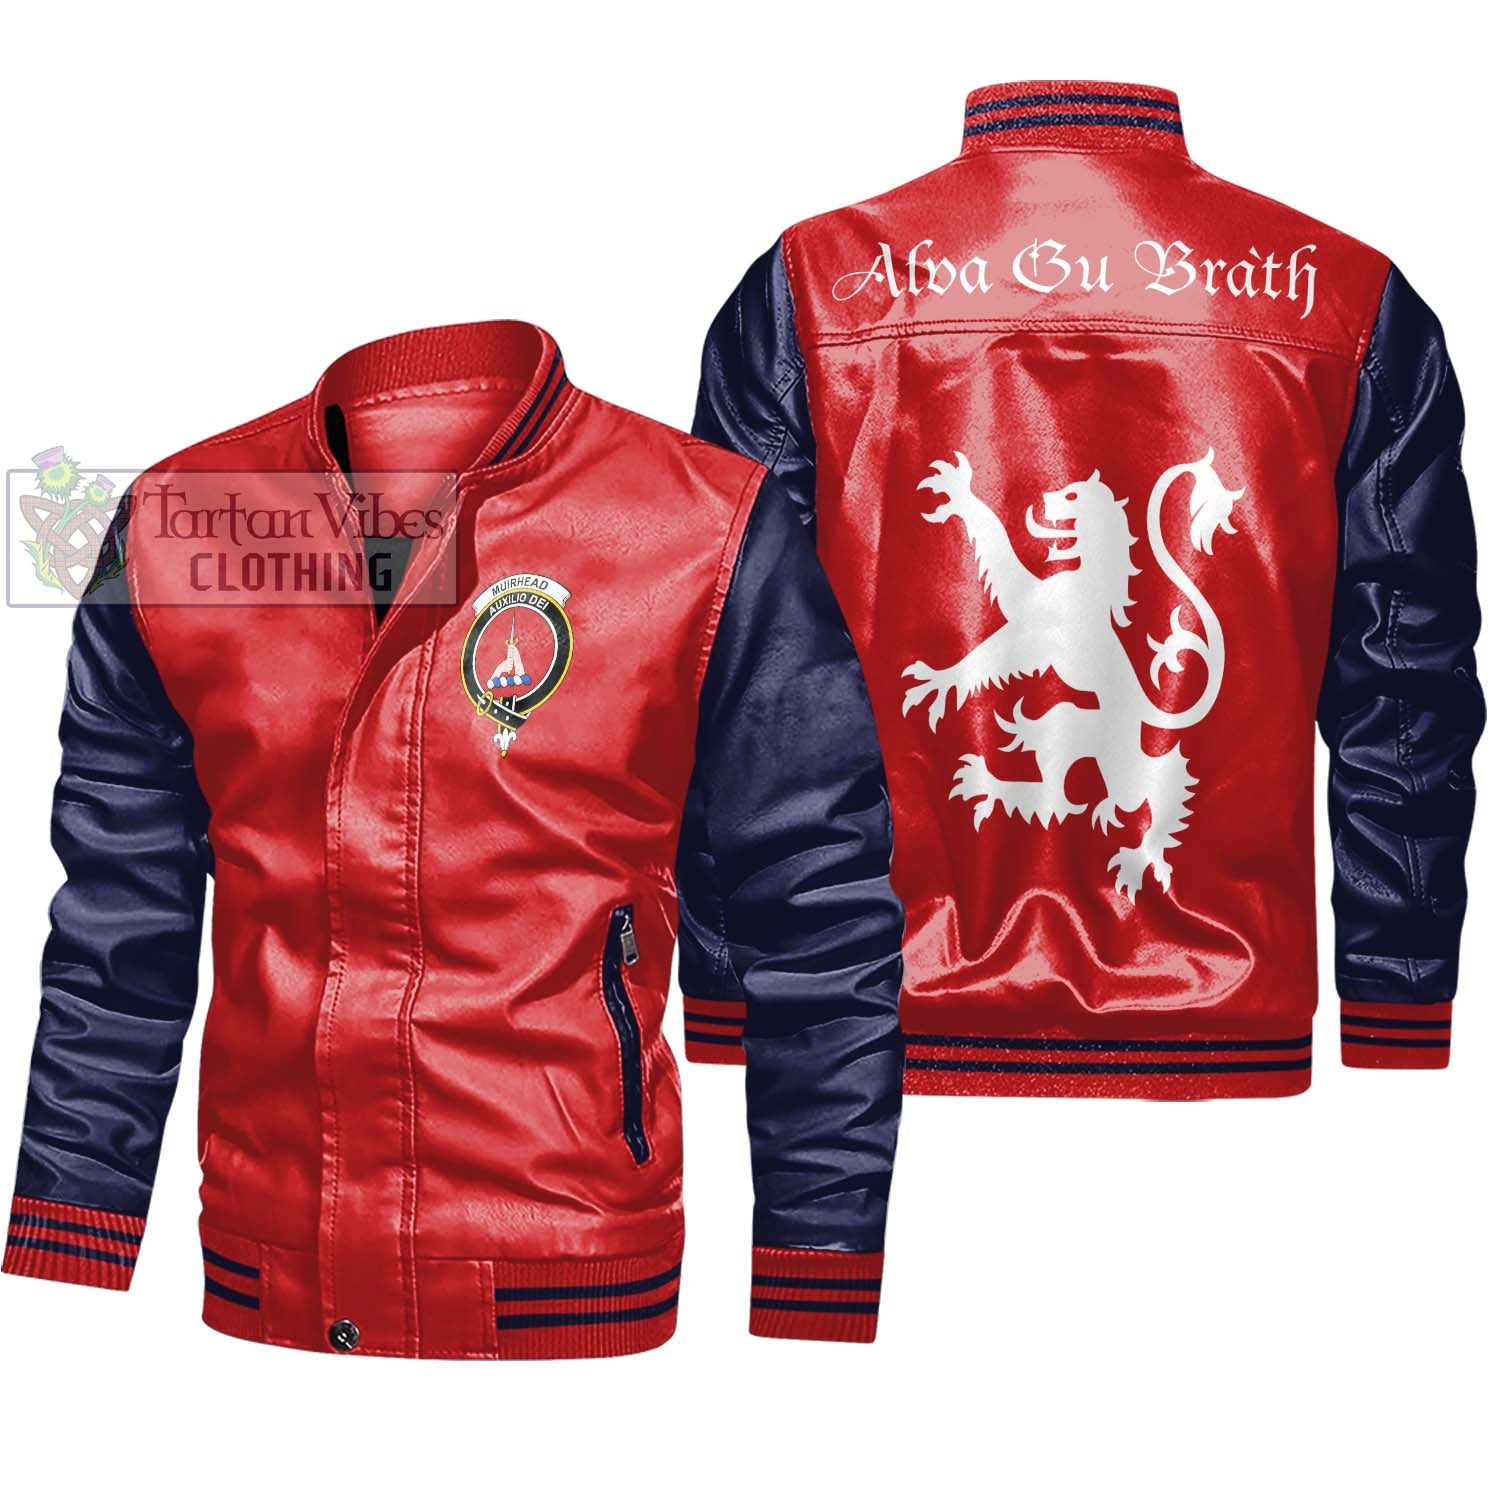 Tartan Vibes Clothing Muirhead Family Crest Leather Bomber Jacket Lion Rampant Alba Gu Brath Style